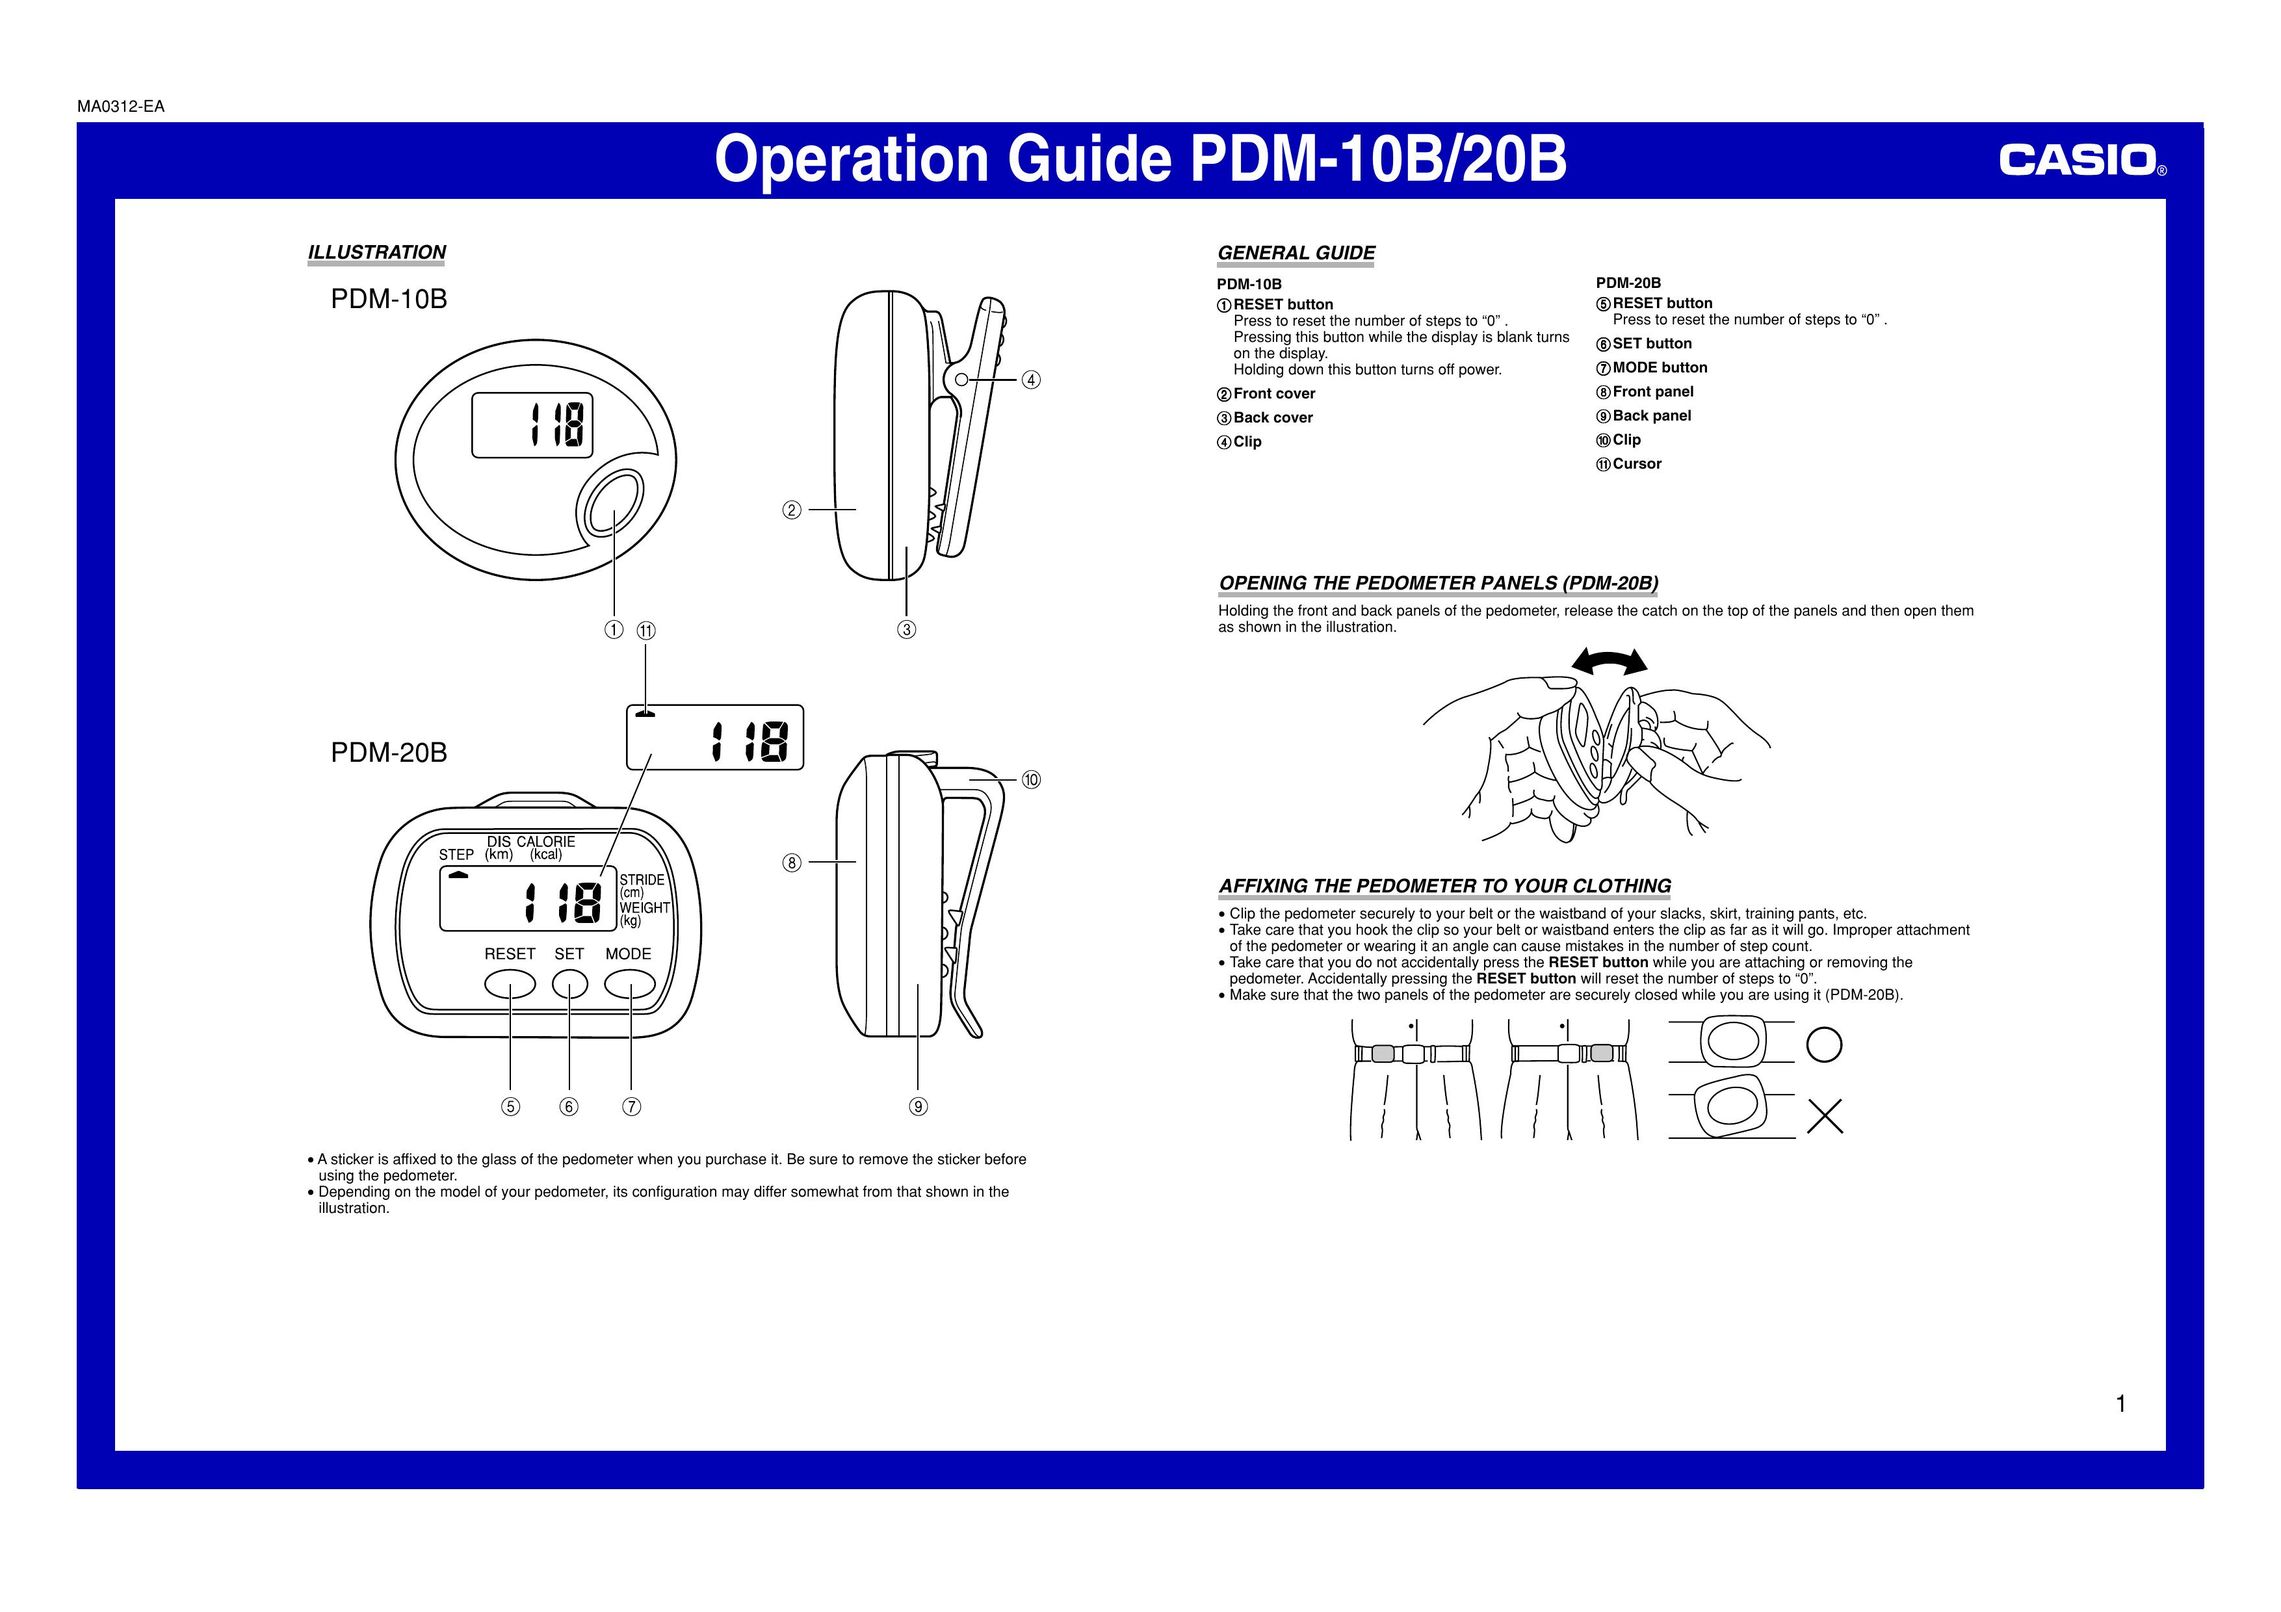 Casio PDM-20B Fitness Electronics User Manual